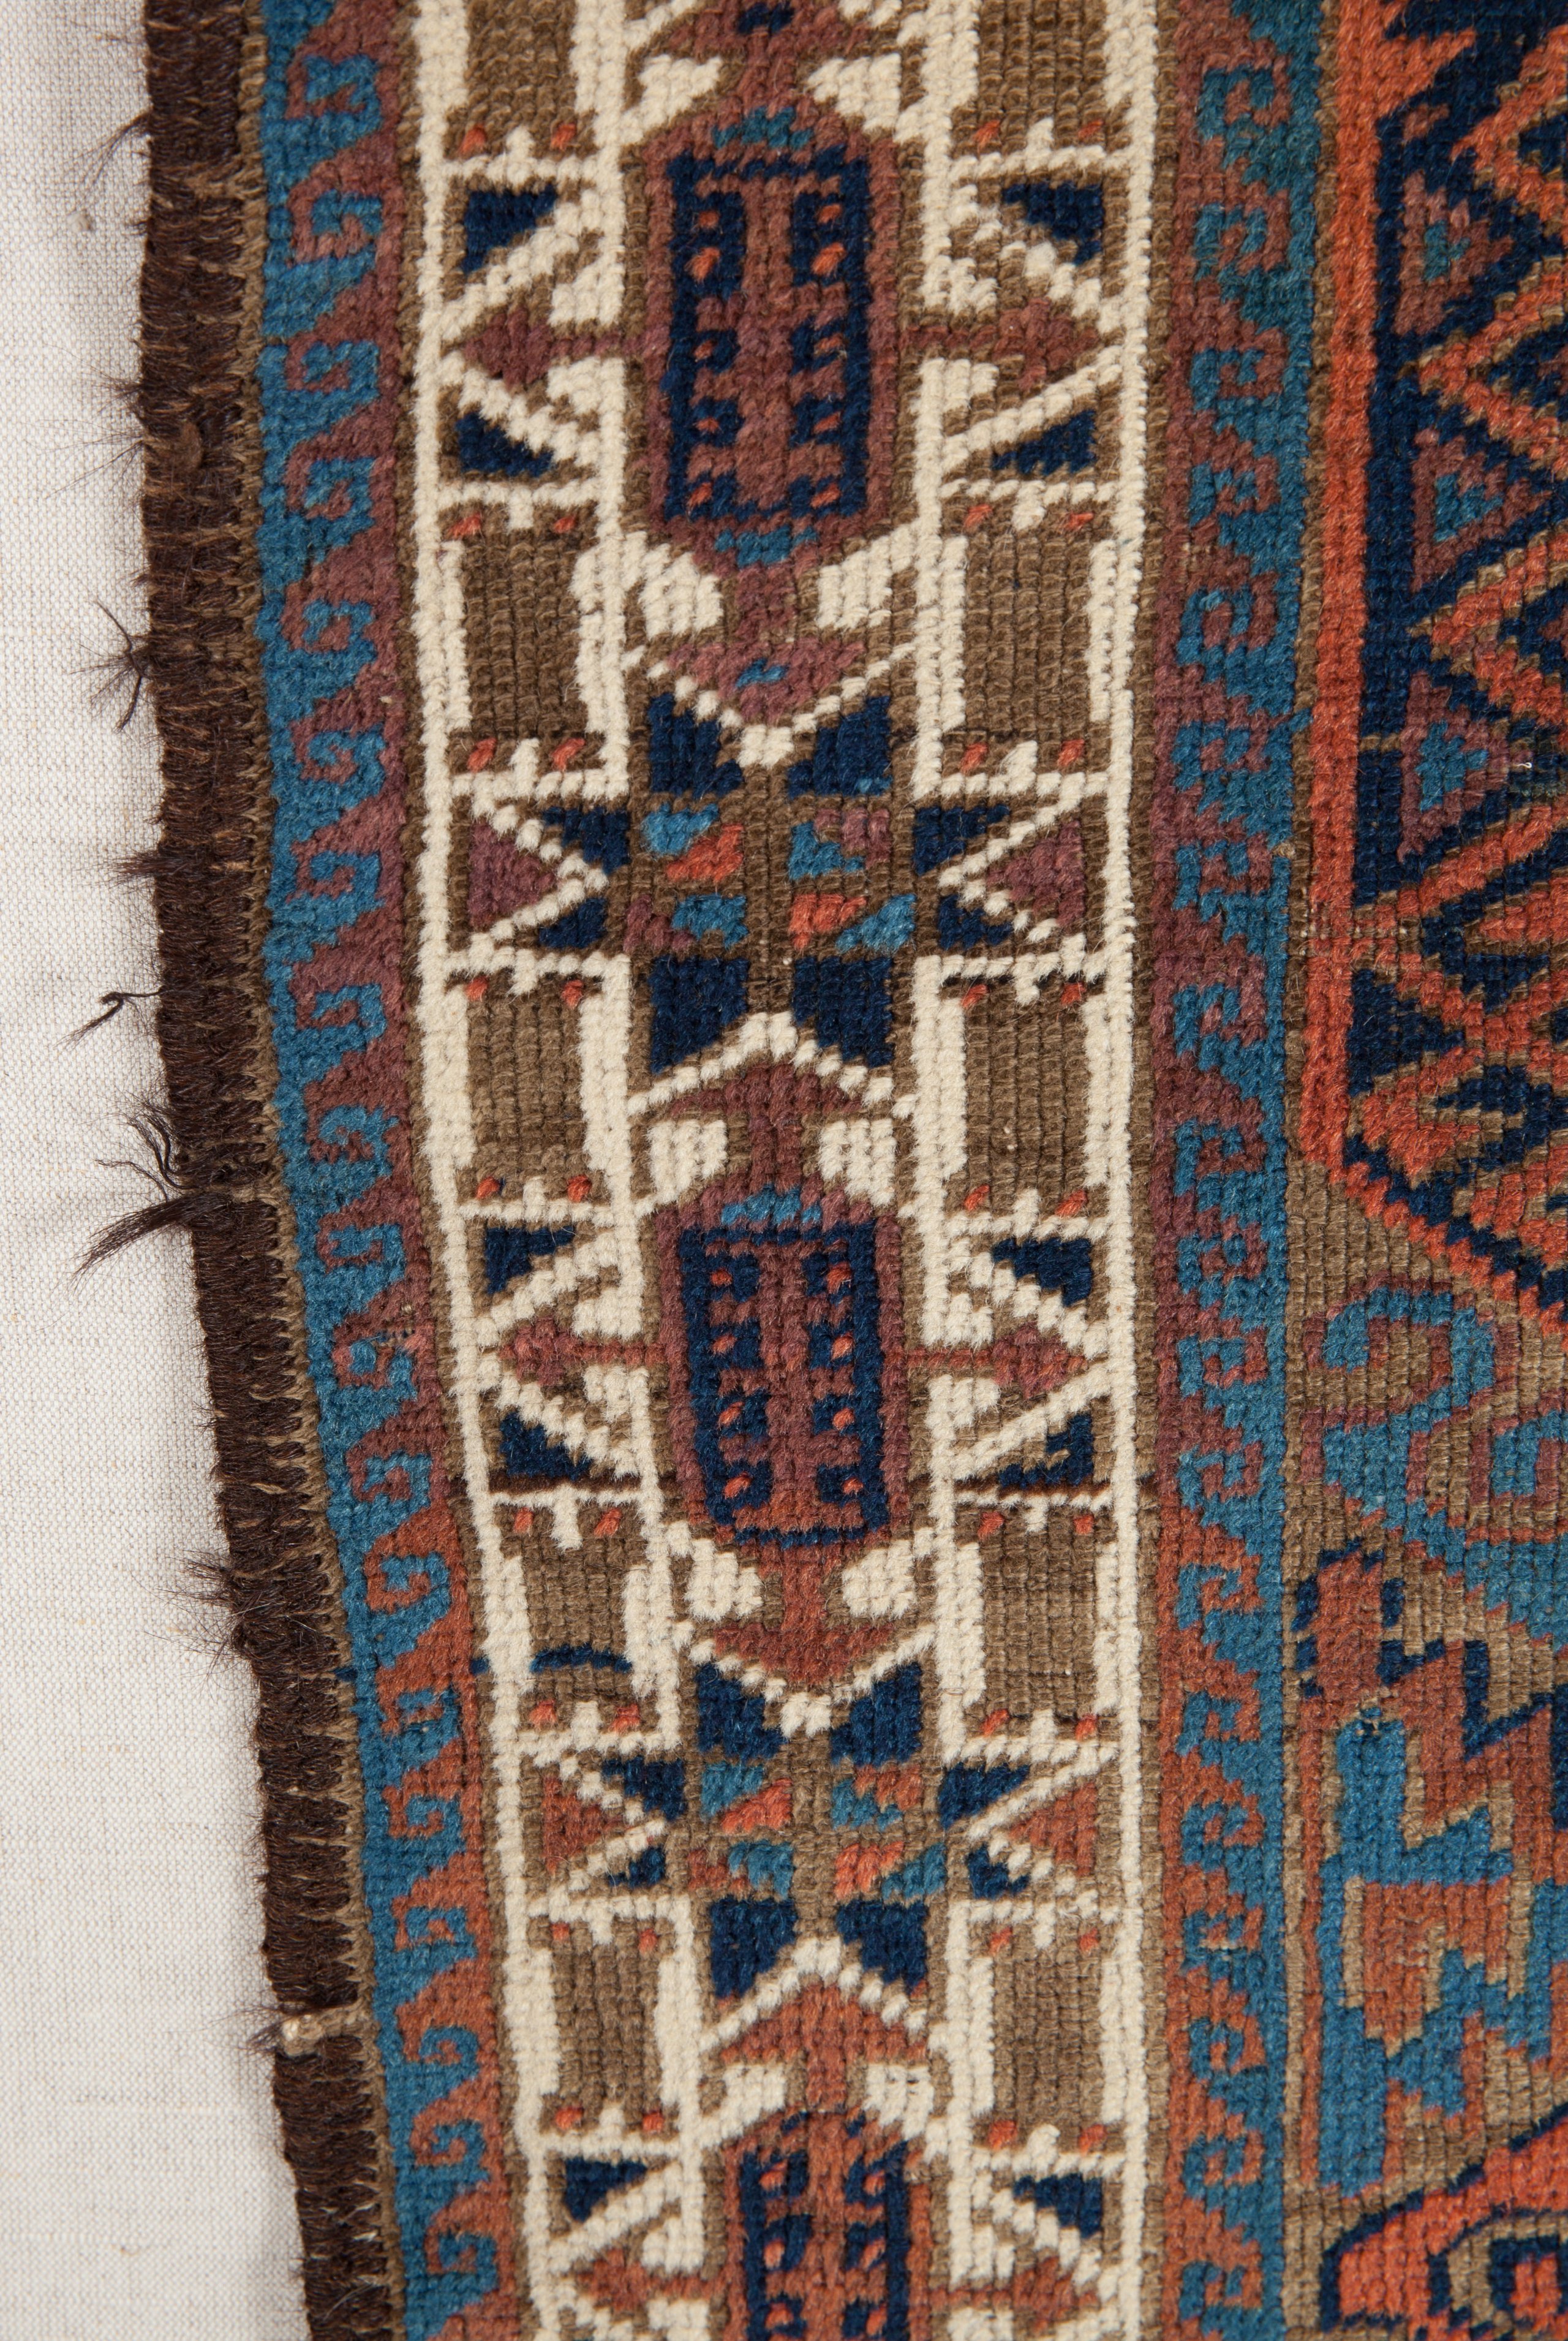 Mashwani design rug, western Afghanistan